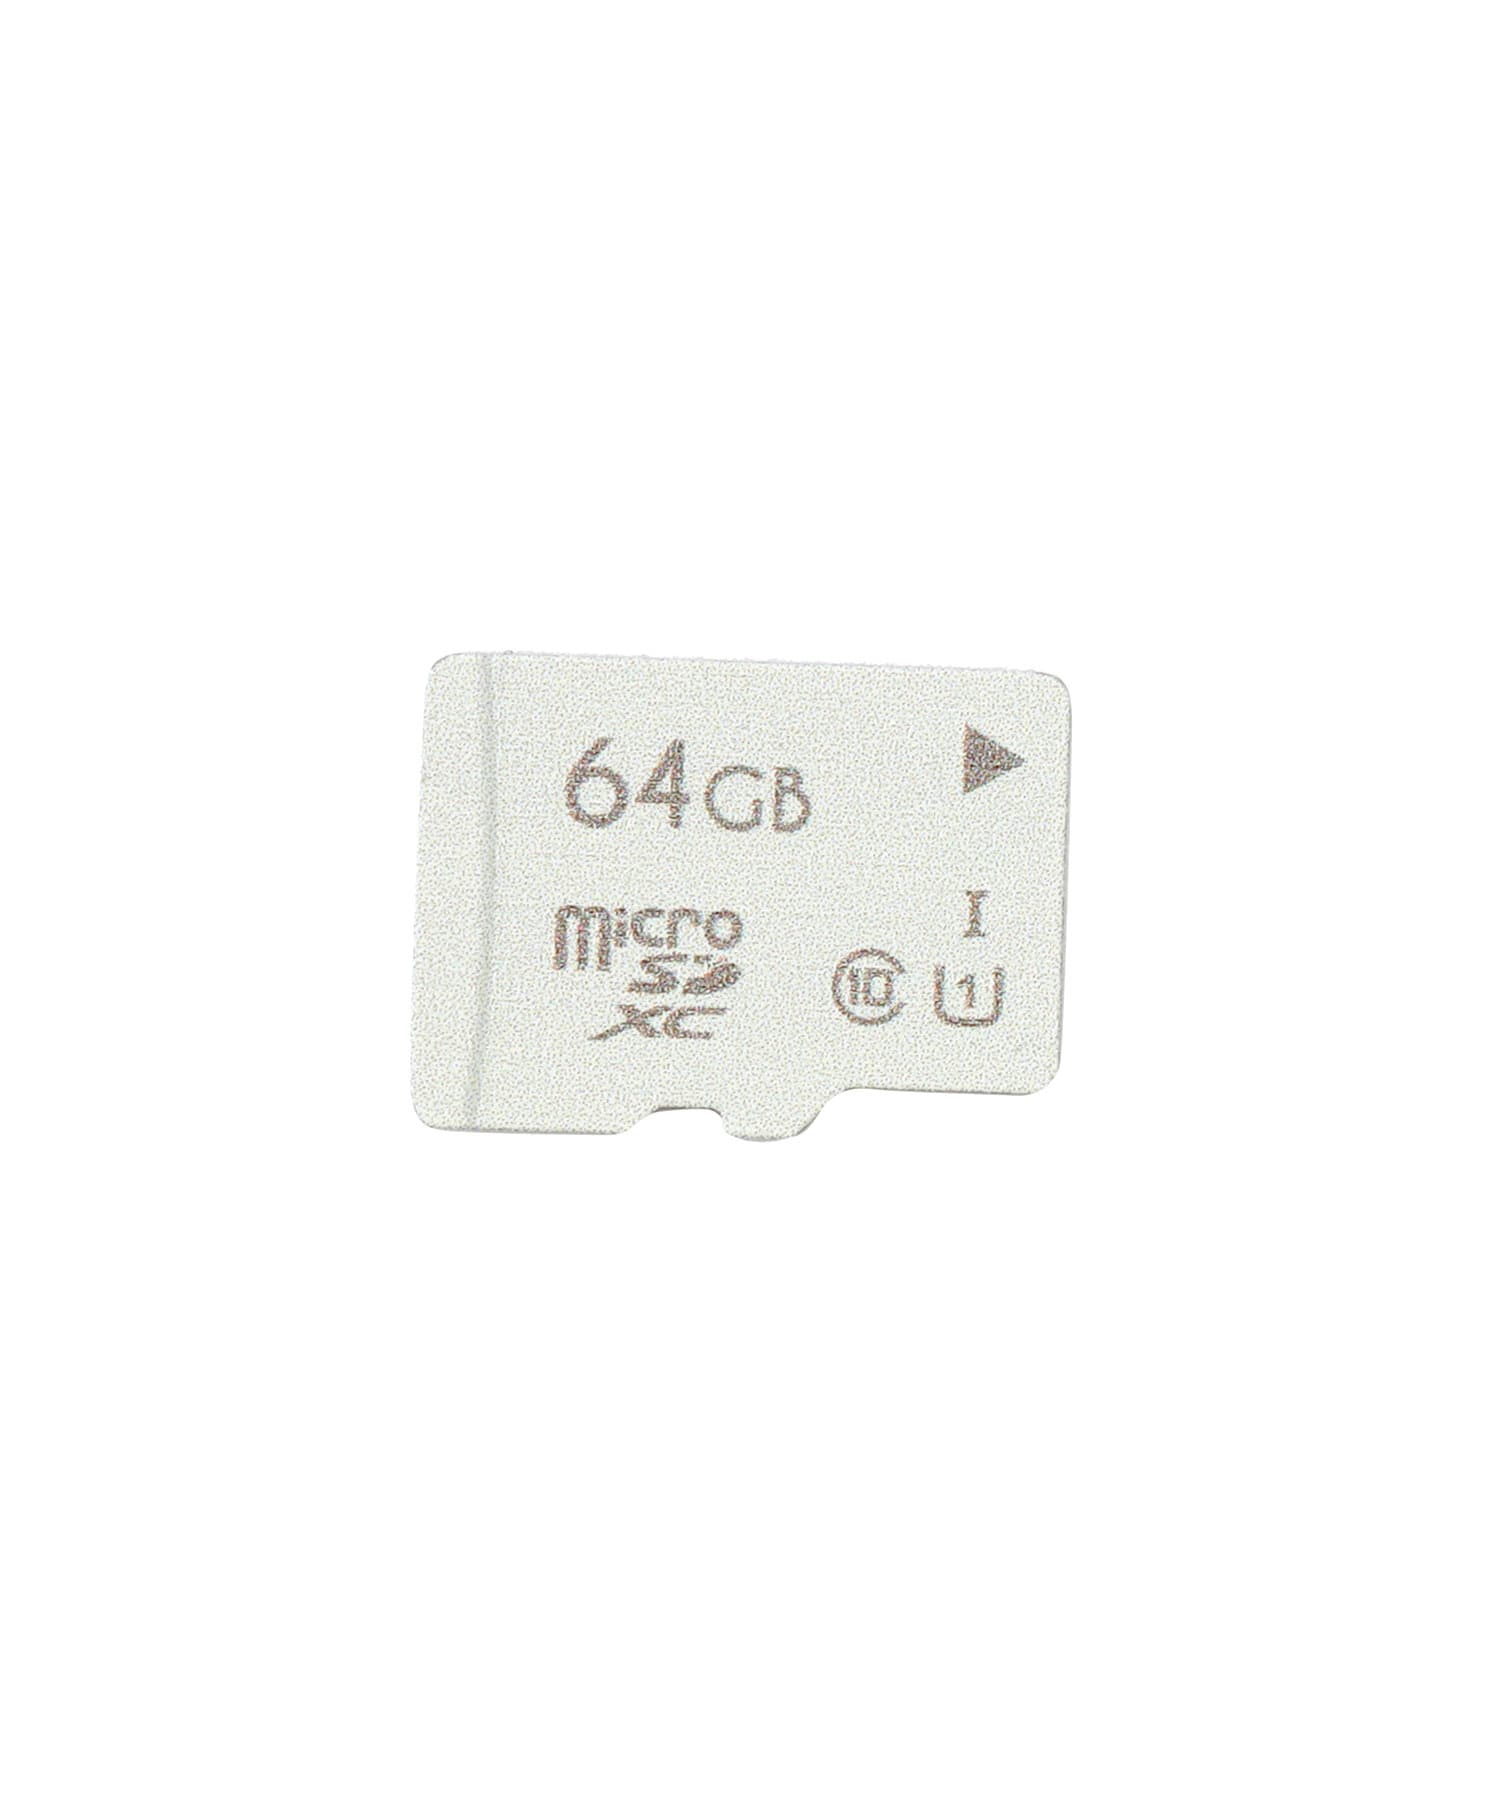 3COINS(スリーコインズ) microSDカード64G